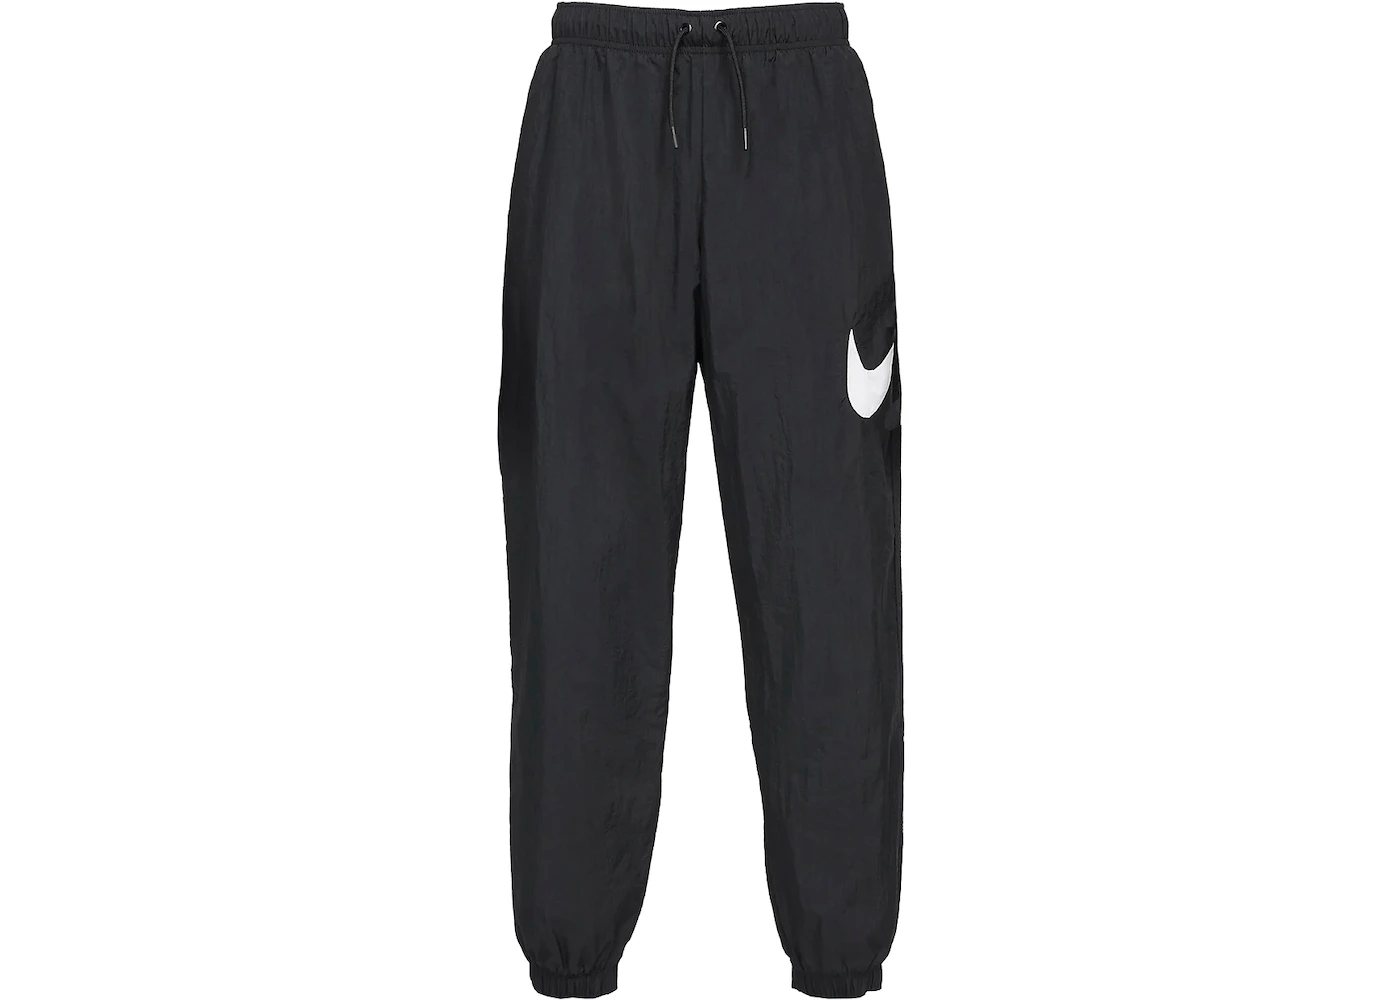 Nike Women's Sportswear Essential Mid-Rise Pants Black/White